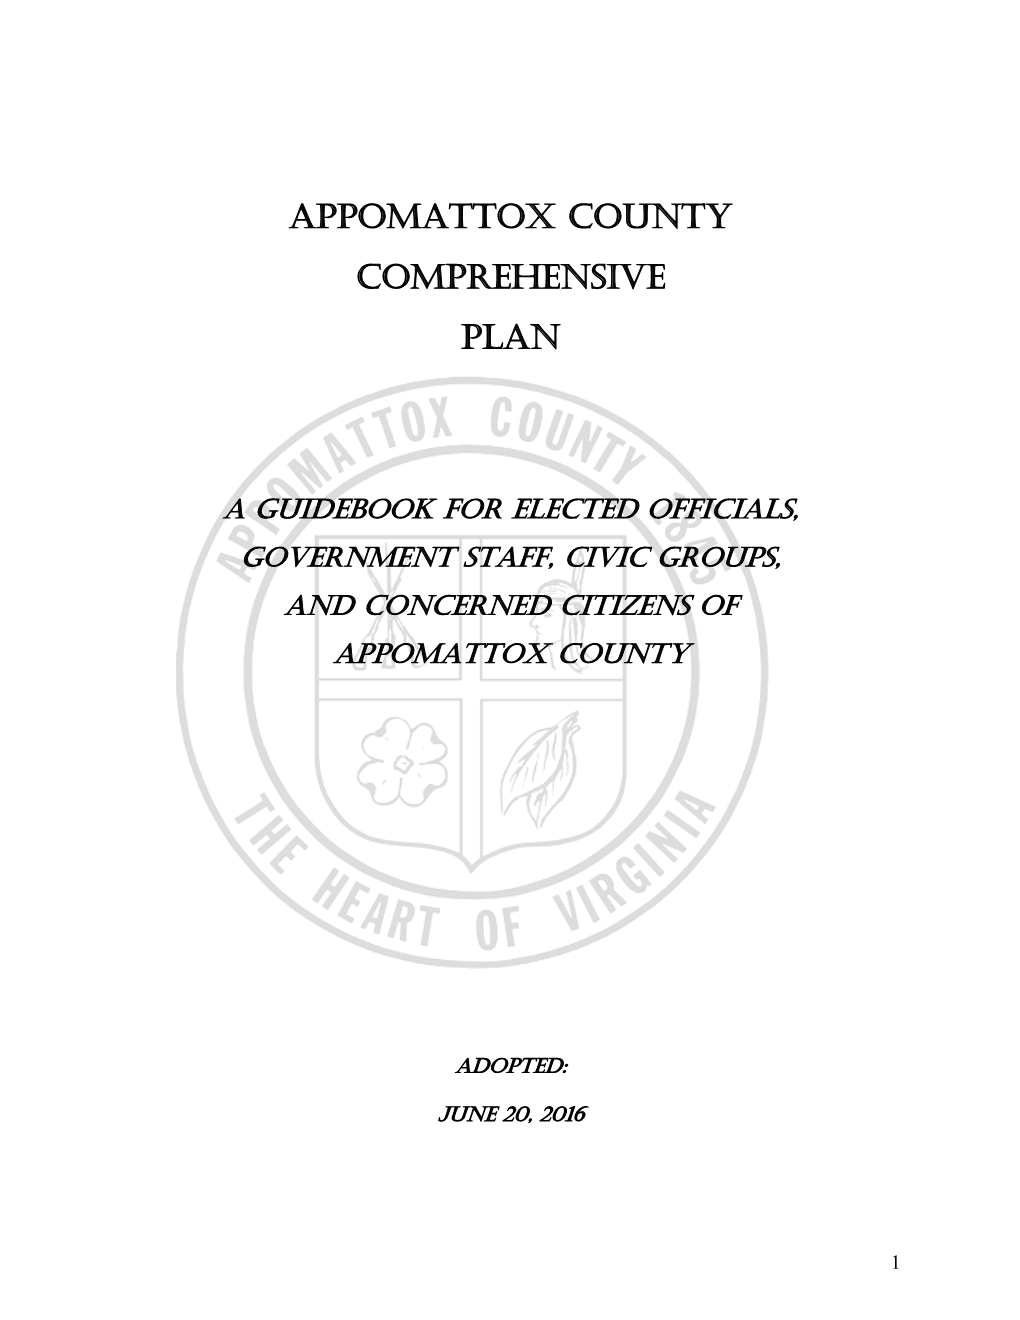 Appomattox County Comprehensive Plan